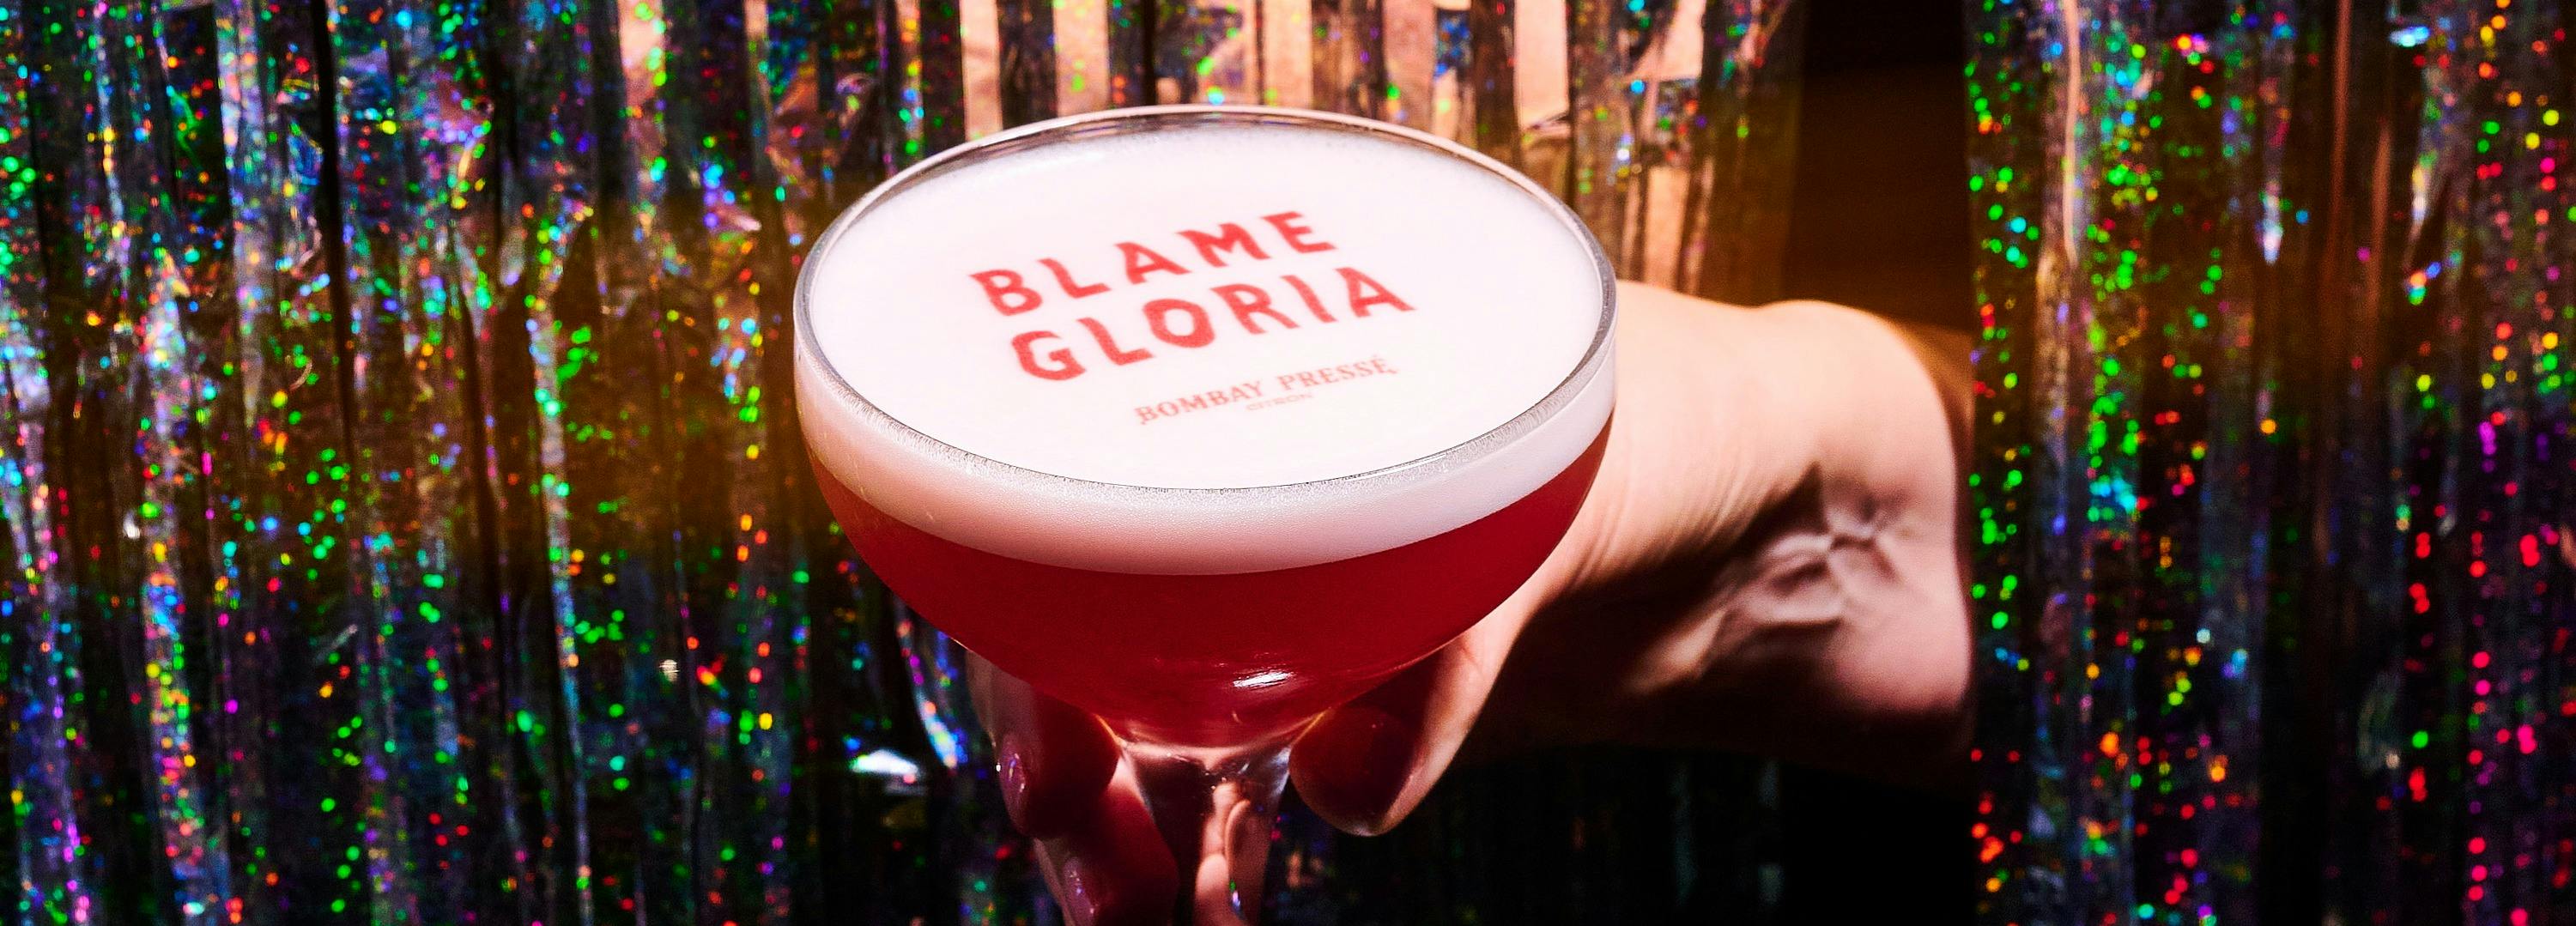 Blame Gloria Cocktail